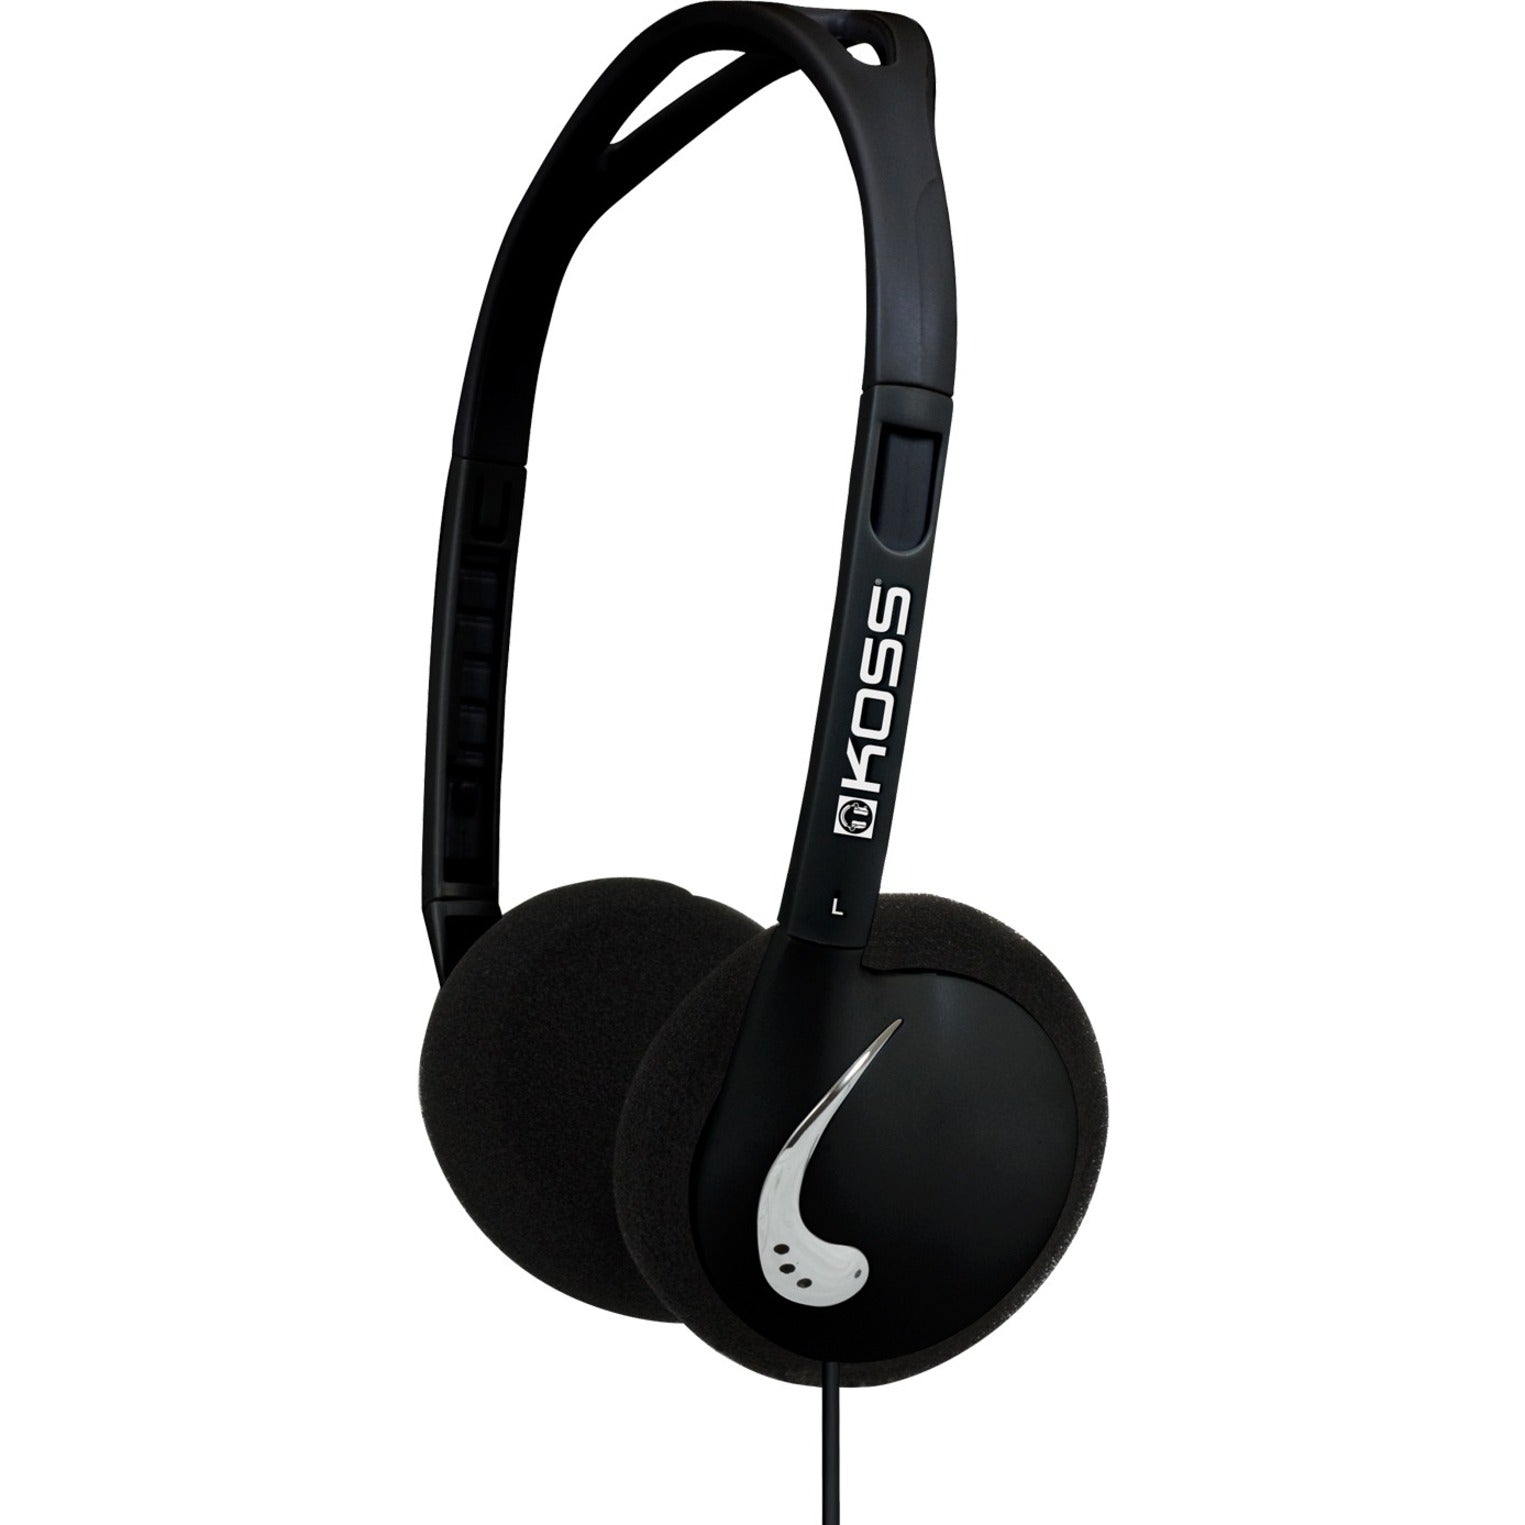 Koss KPH25K KPH25 On Ear Headphones, Binaural, Over-the-head, Volume Control, Lifetime Warranty